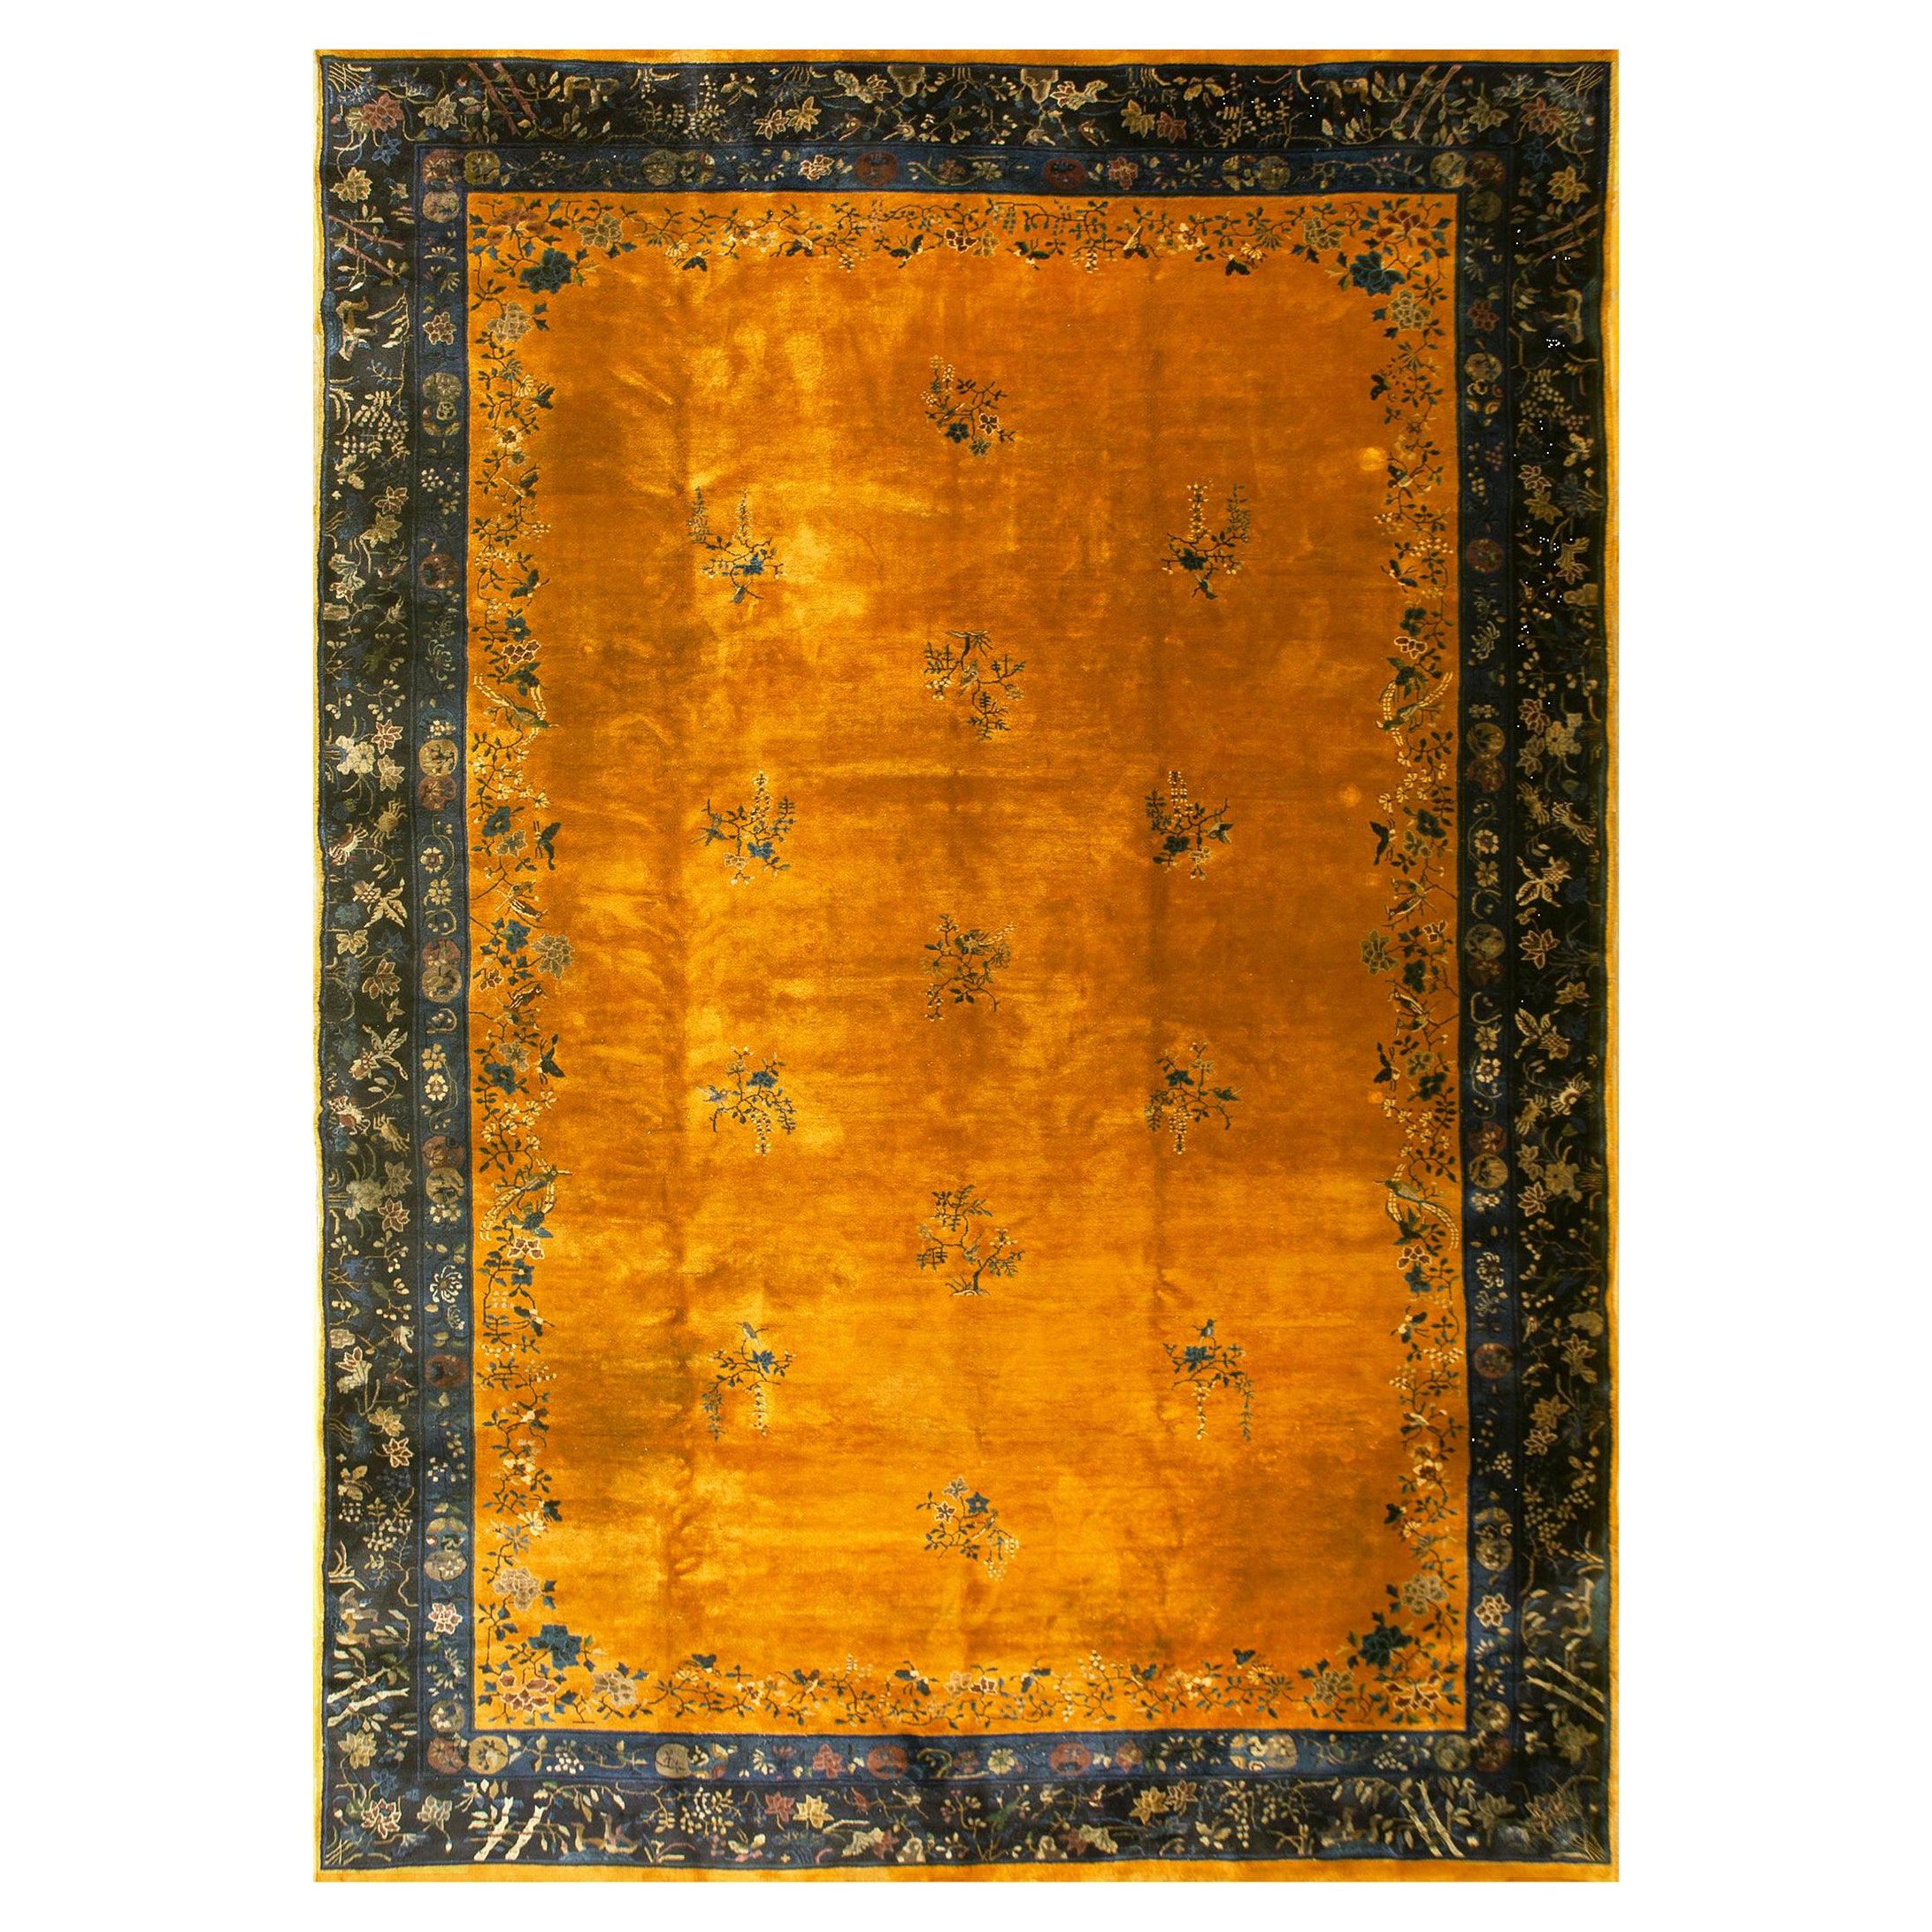 1920s Chinese Art Deco Carpet ( 11'8" x 16'8" - 356 x 508 )